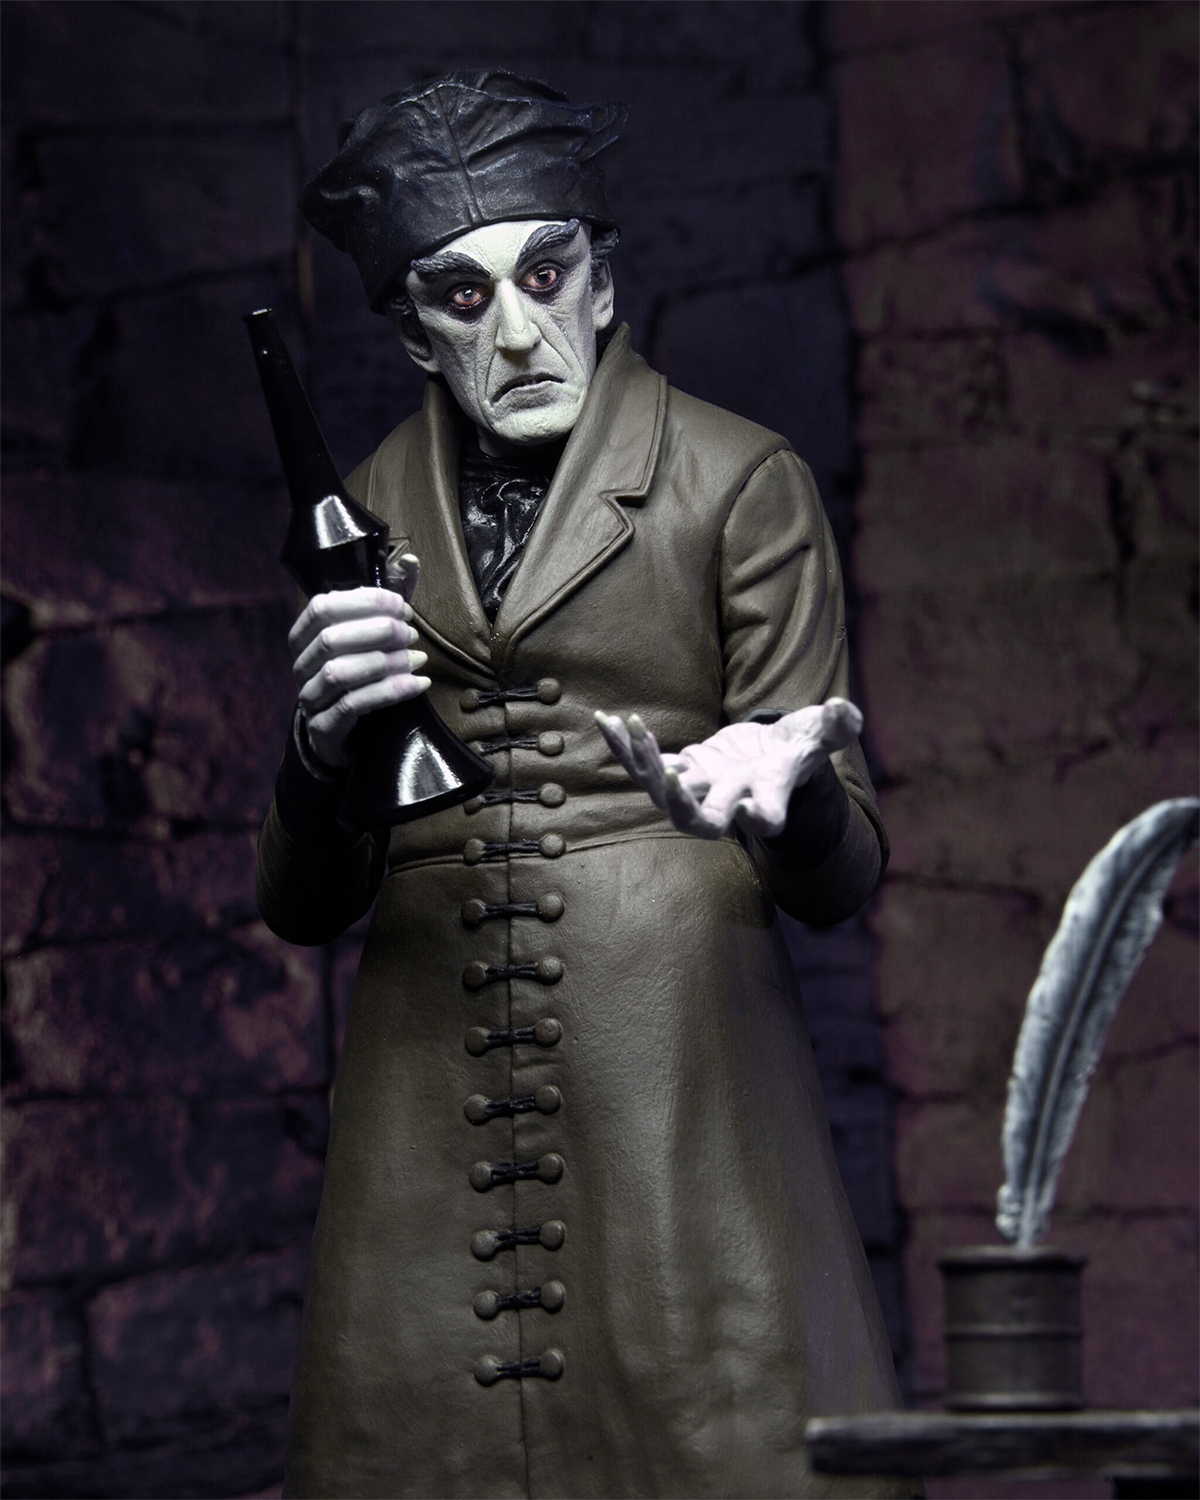 Nosferatu Count Orlok Ultimate 7-Inch Scale Action Figure